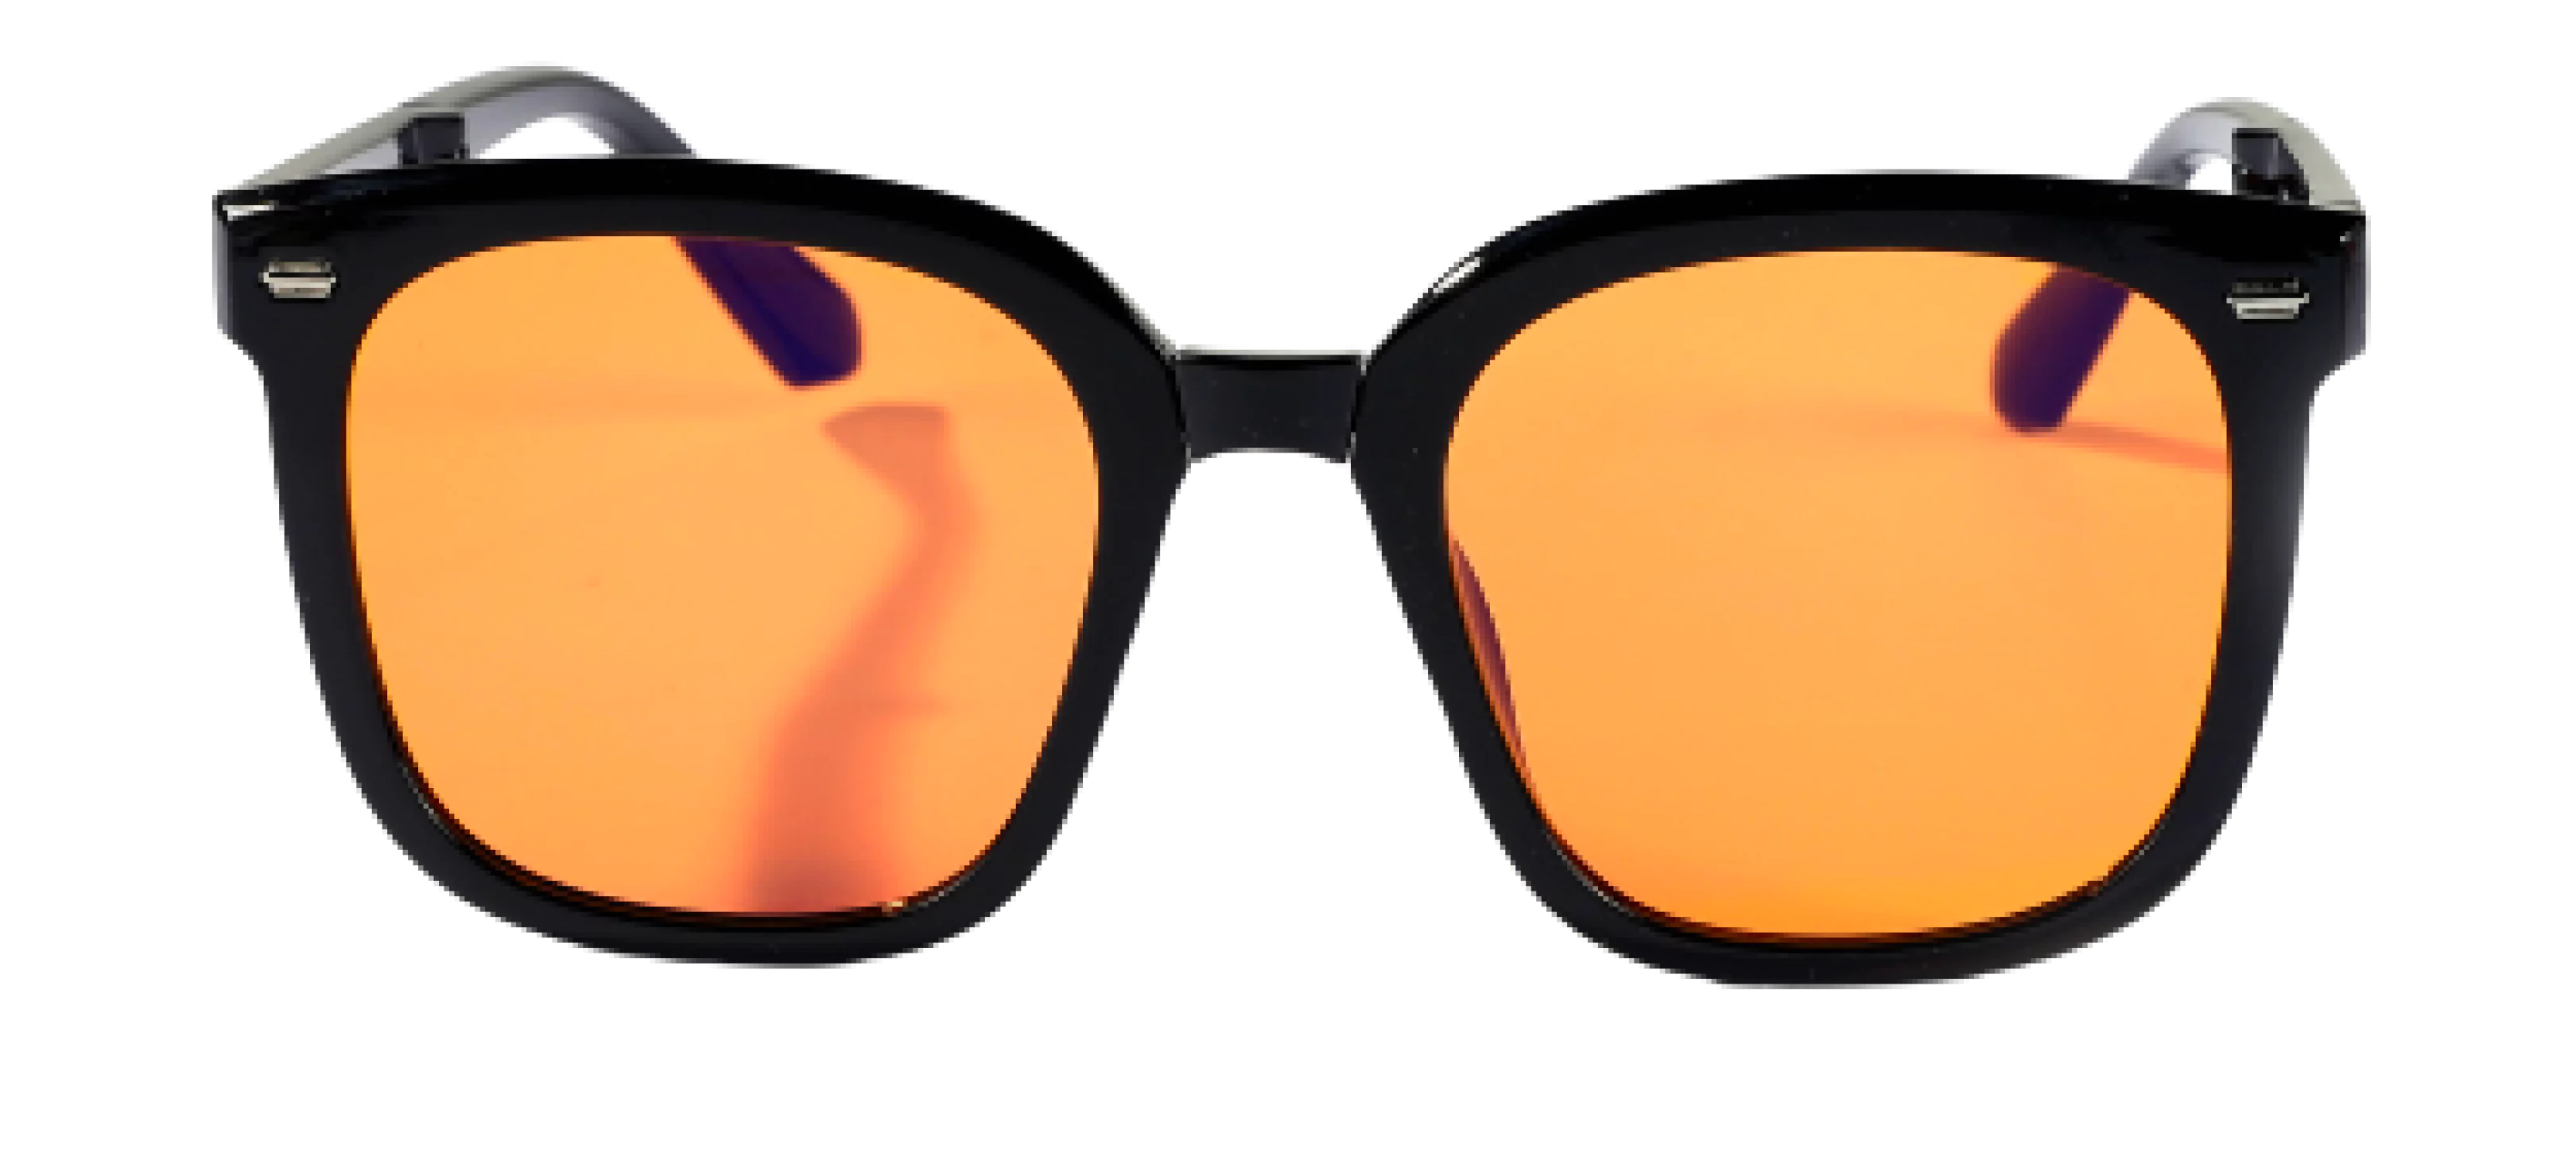 Black sunglasses with orange reflective lenses on a white background.